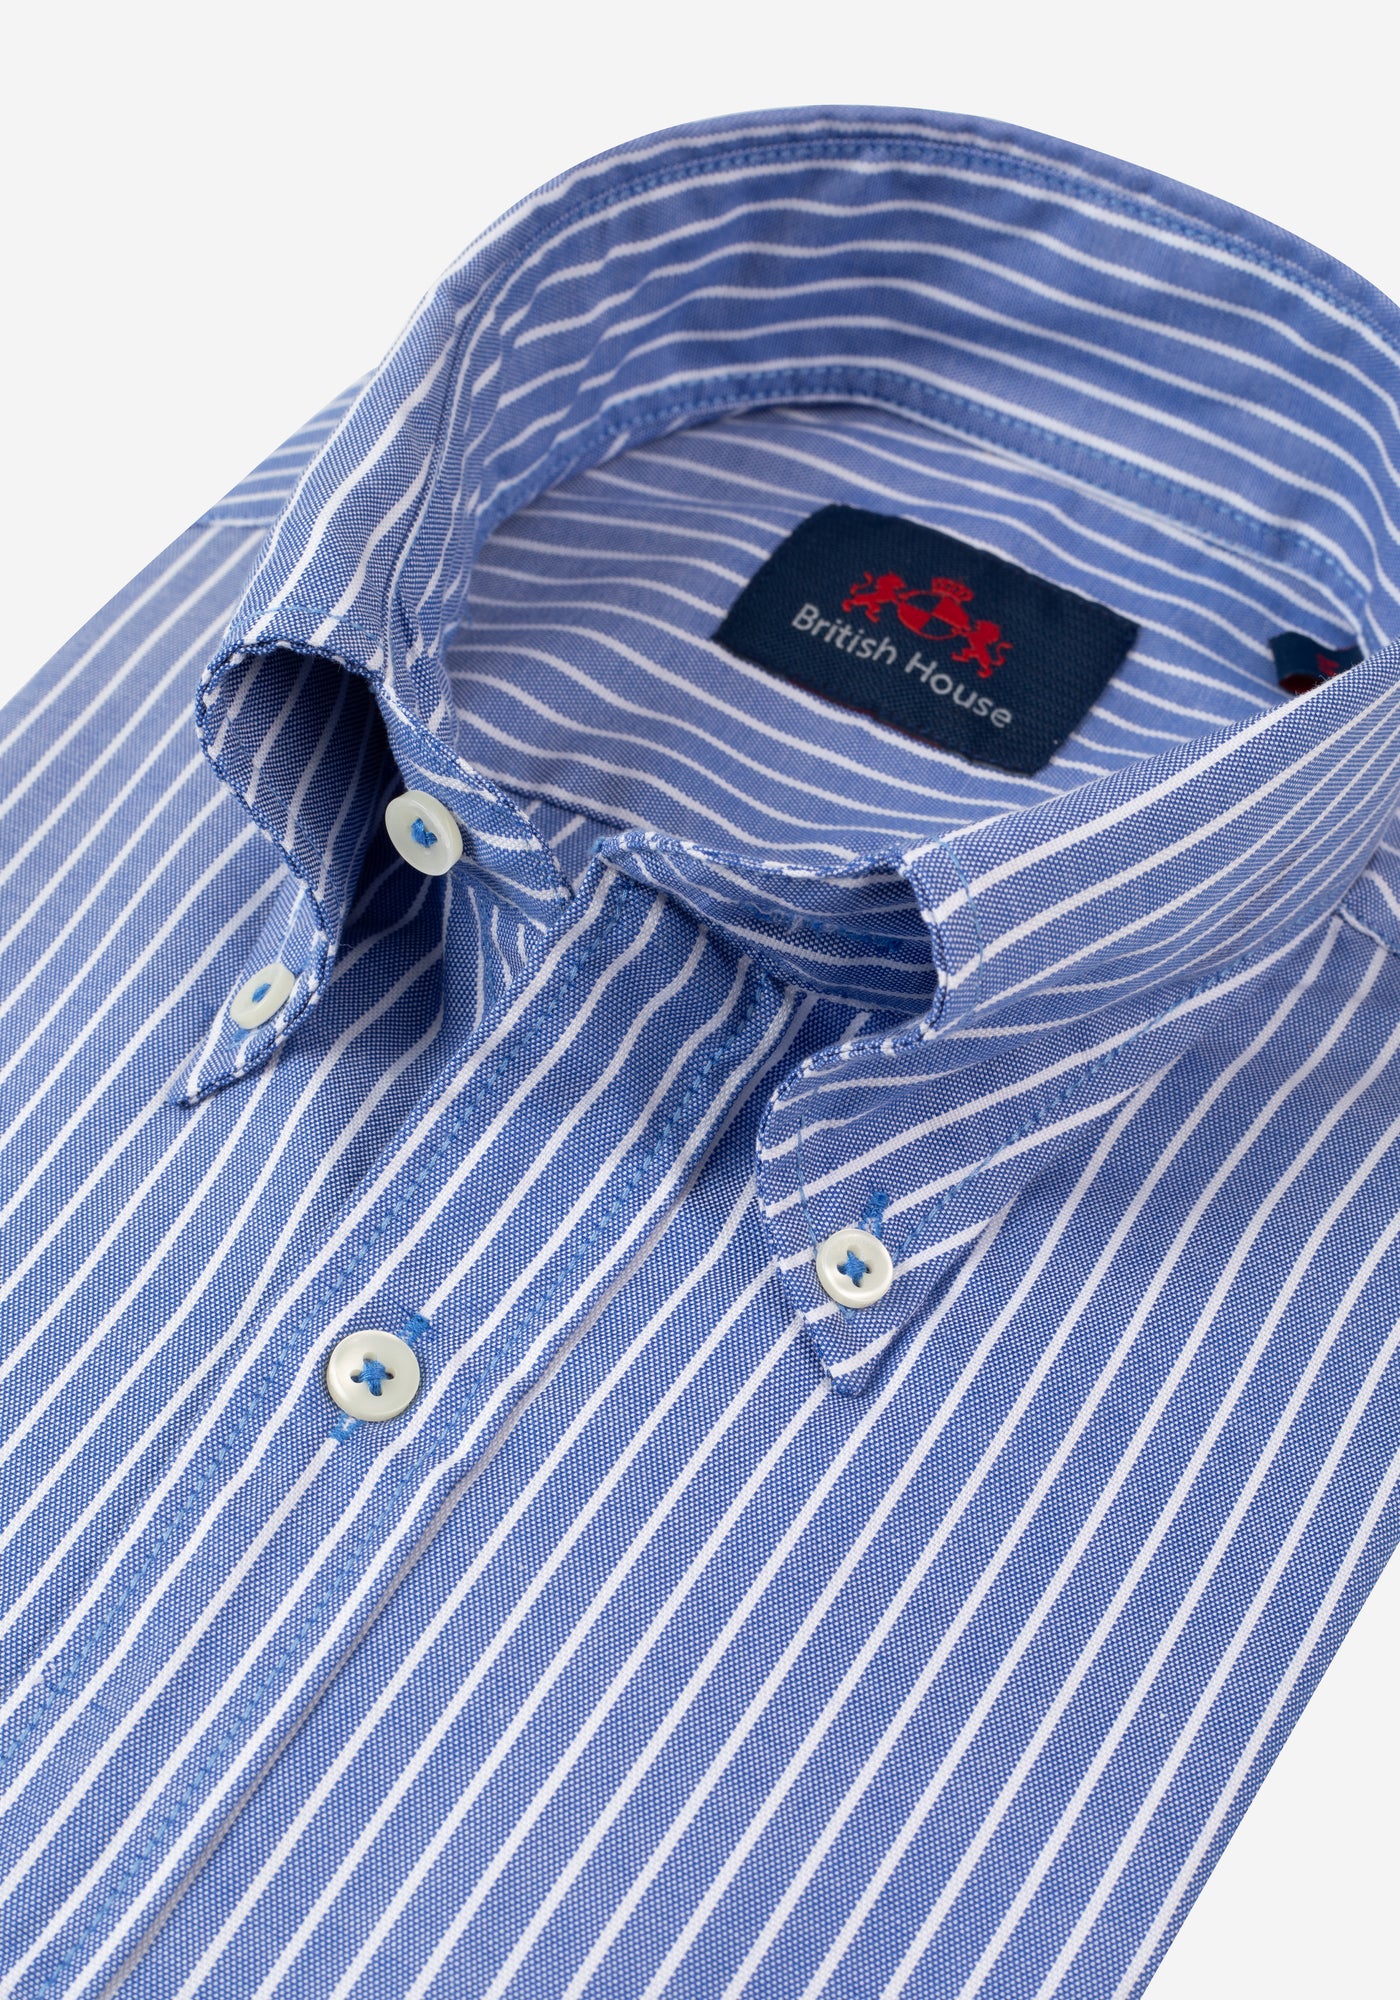 Polar Blue Stripe Washed Two-Ply Oxford Shirt